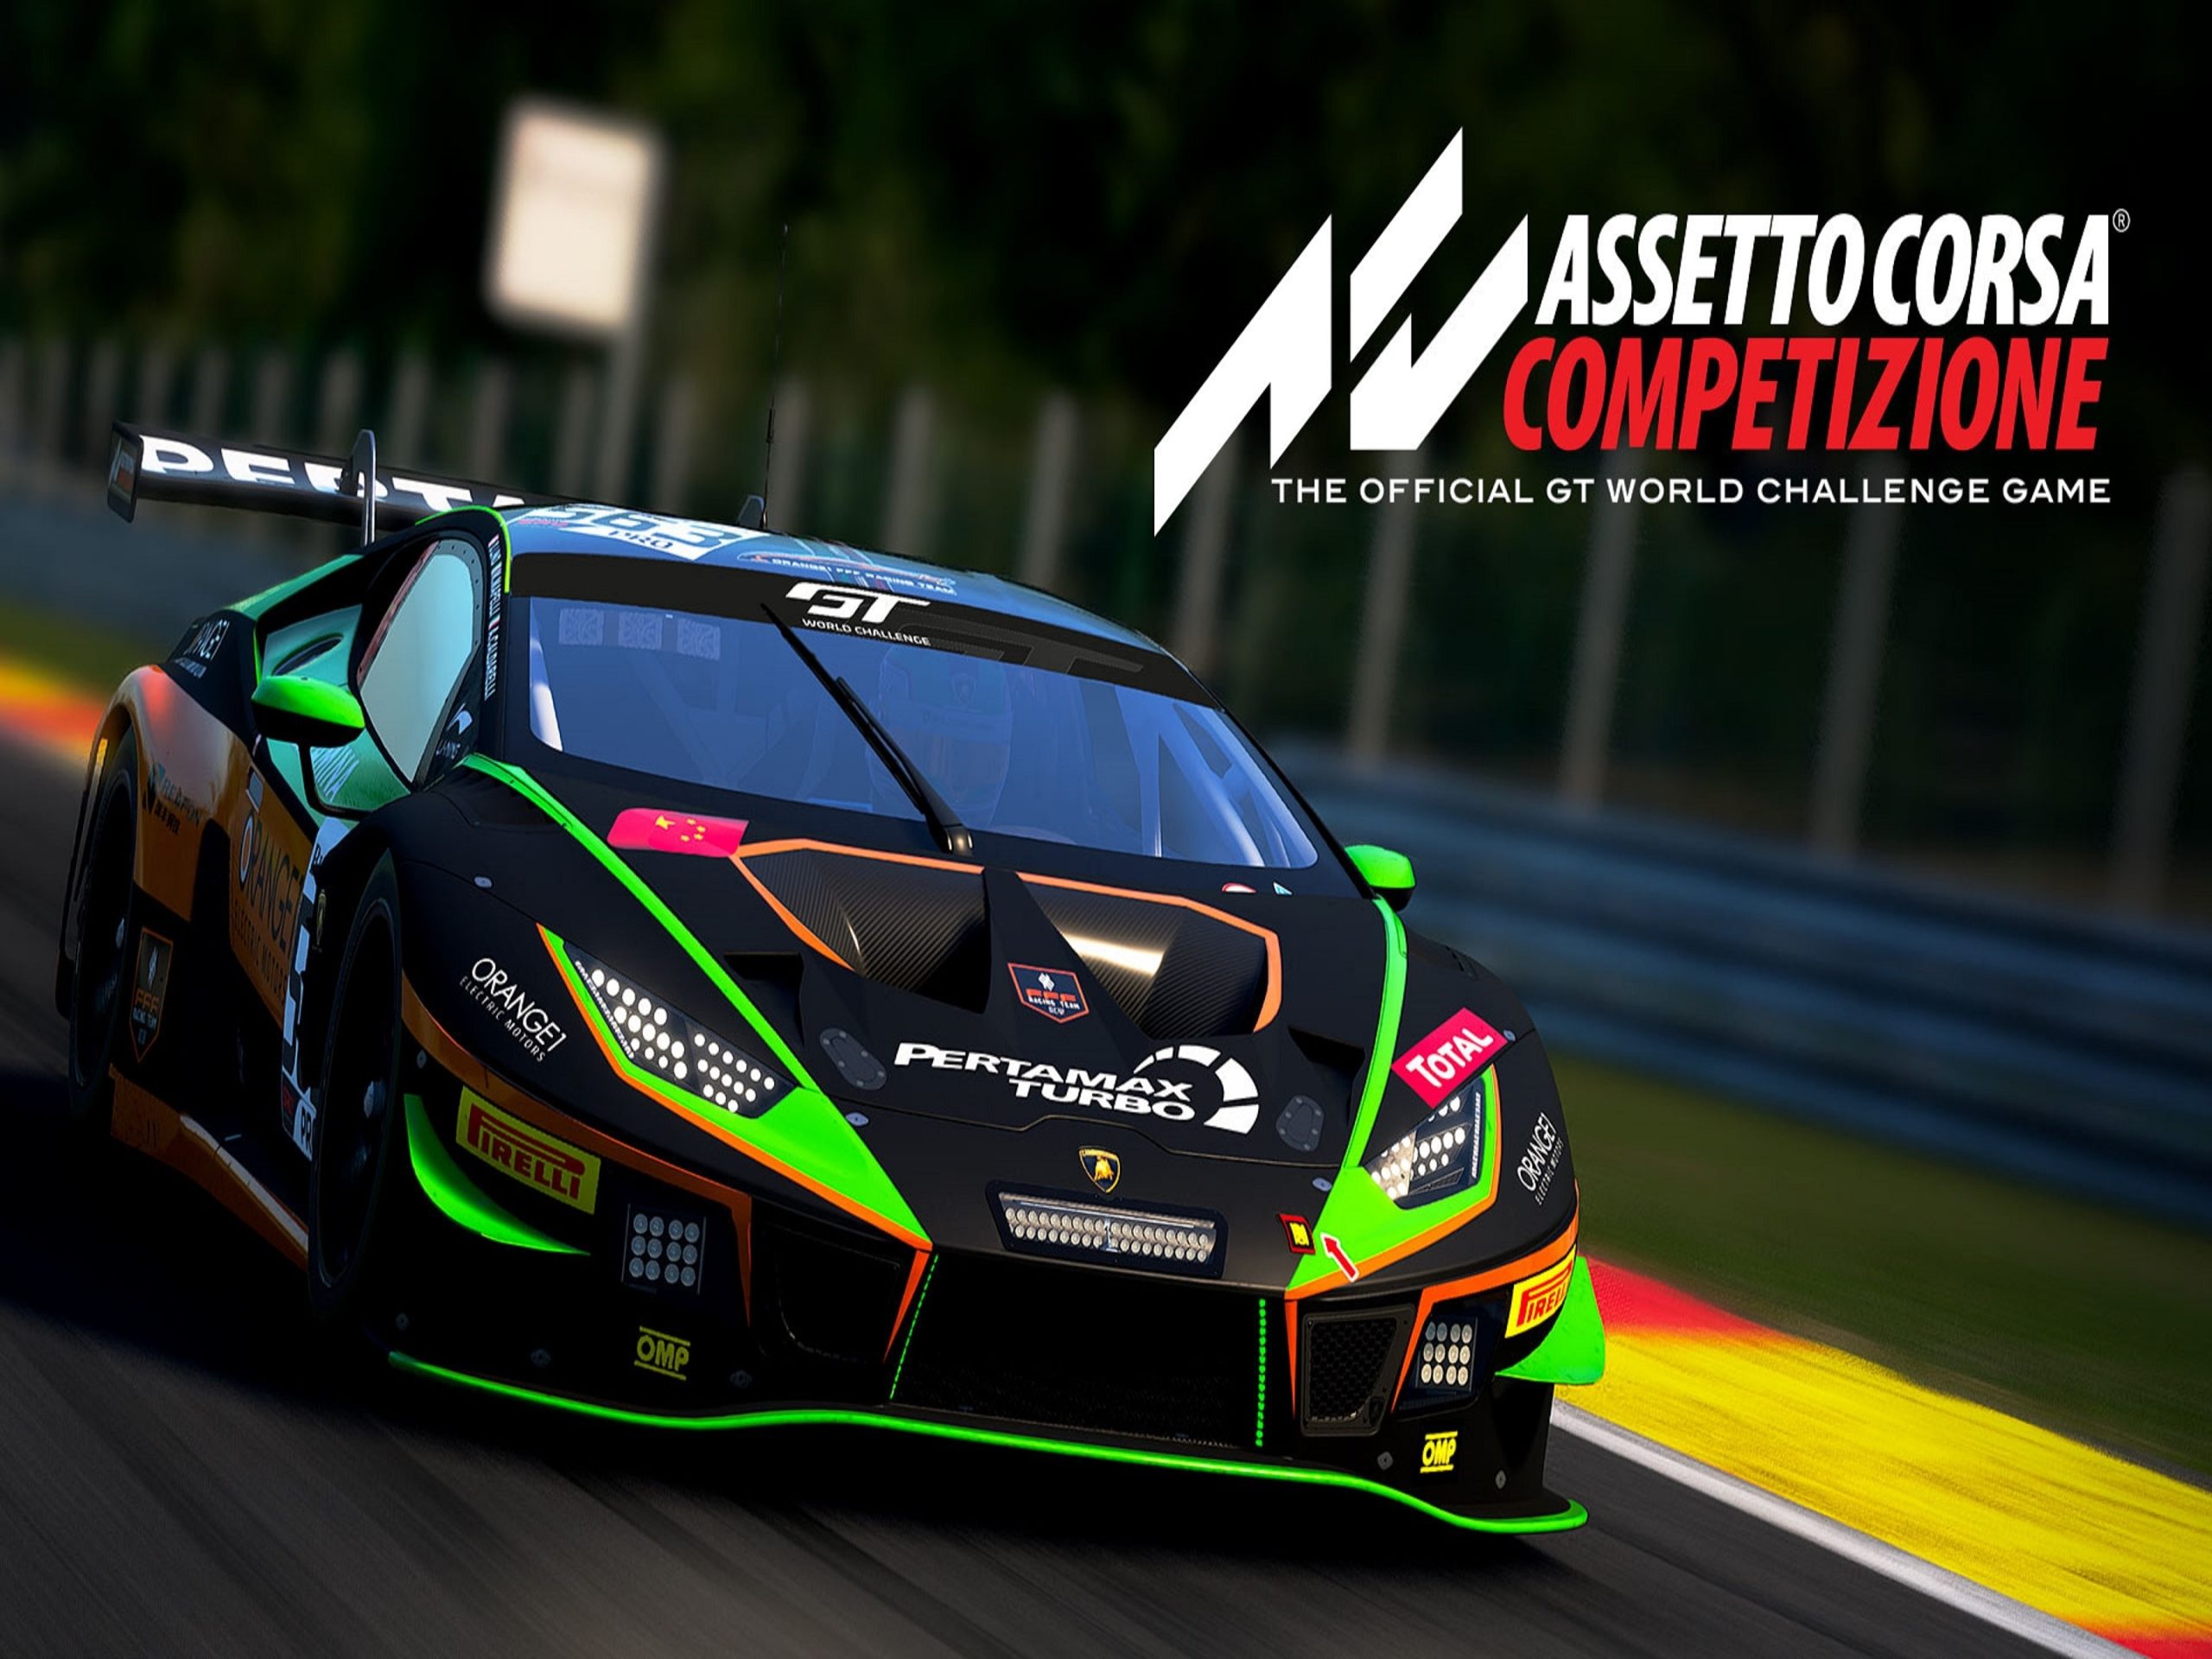 Assetto Corsa Competizione gets a next gen update next February